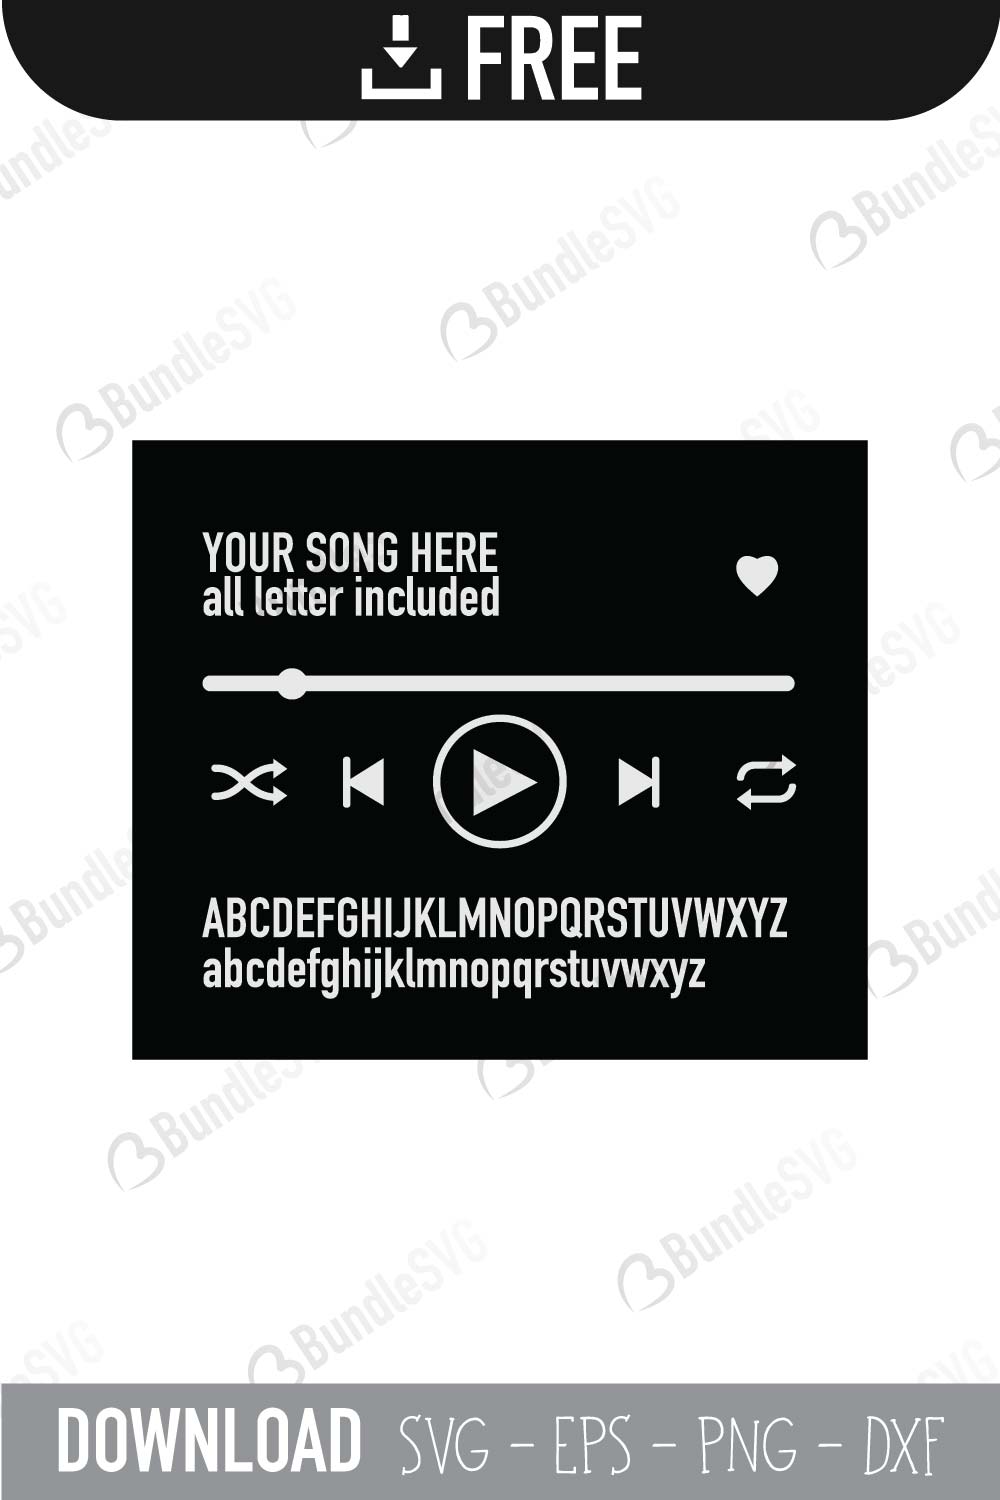 Download Music Player Button Svg Cut Files Free Download Bundlesvg